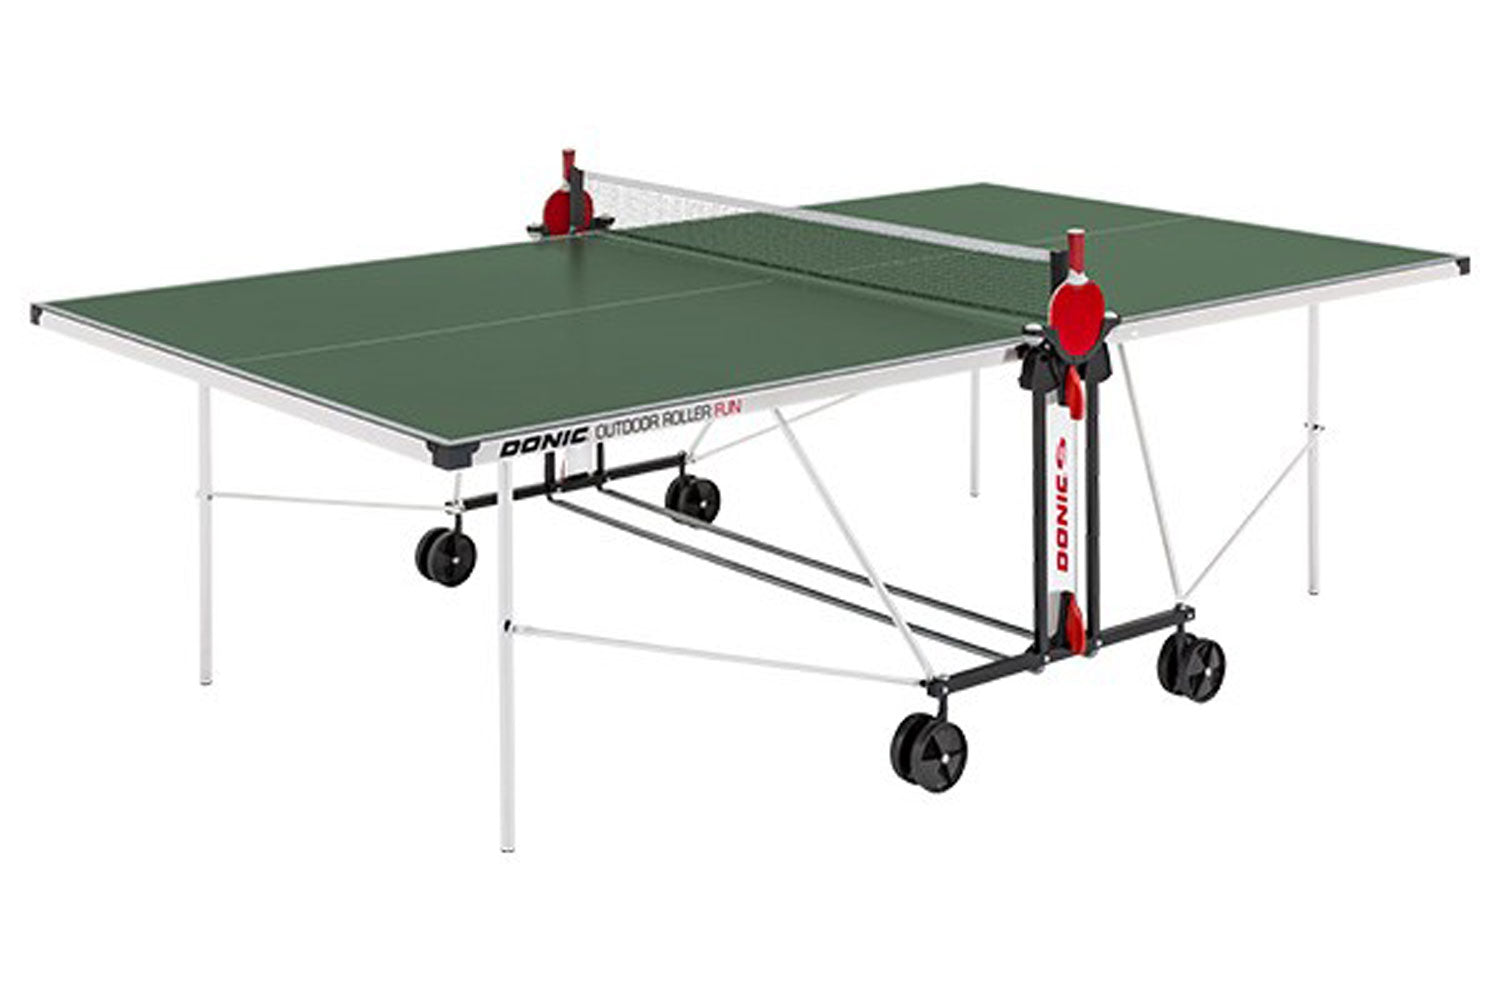 Donic Outdoor Roller Fun Table Tennis Table Green-The Racquet Shop-Shop Online in UAE, Saudi Arabia, Kuwait, Oman, Bahrain and Qatar